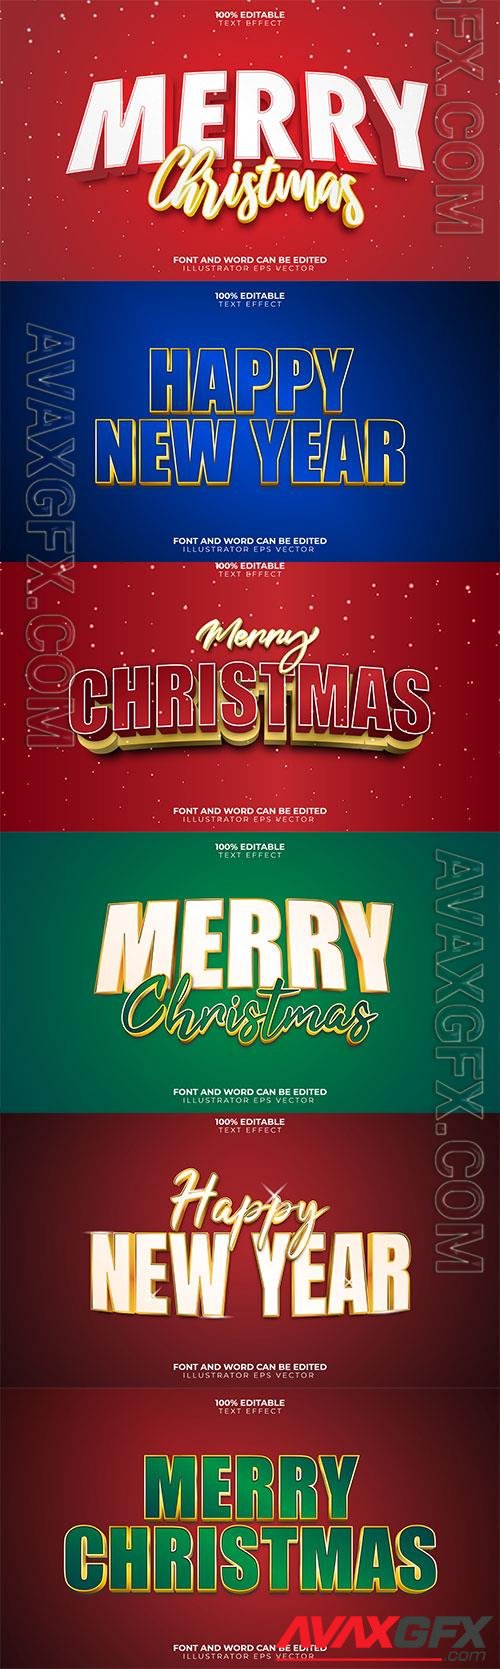 2022 New year, Merry christmas editable text effect premium vector vol 11